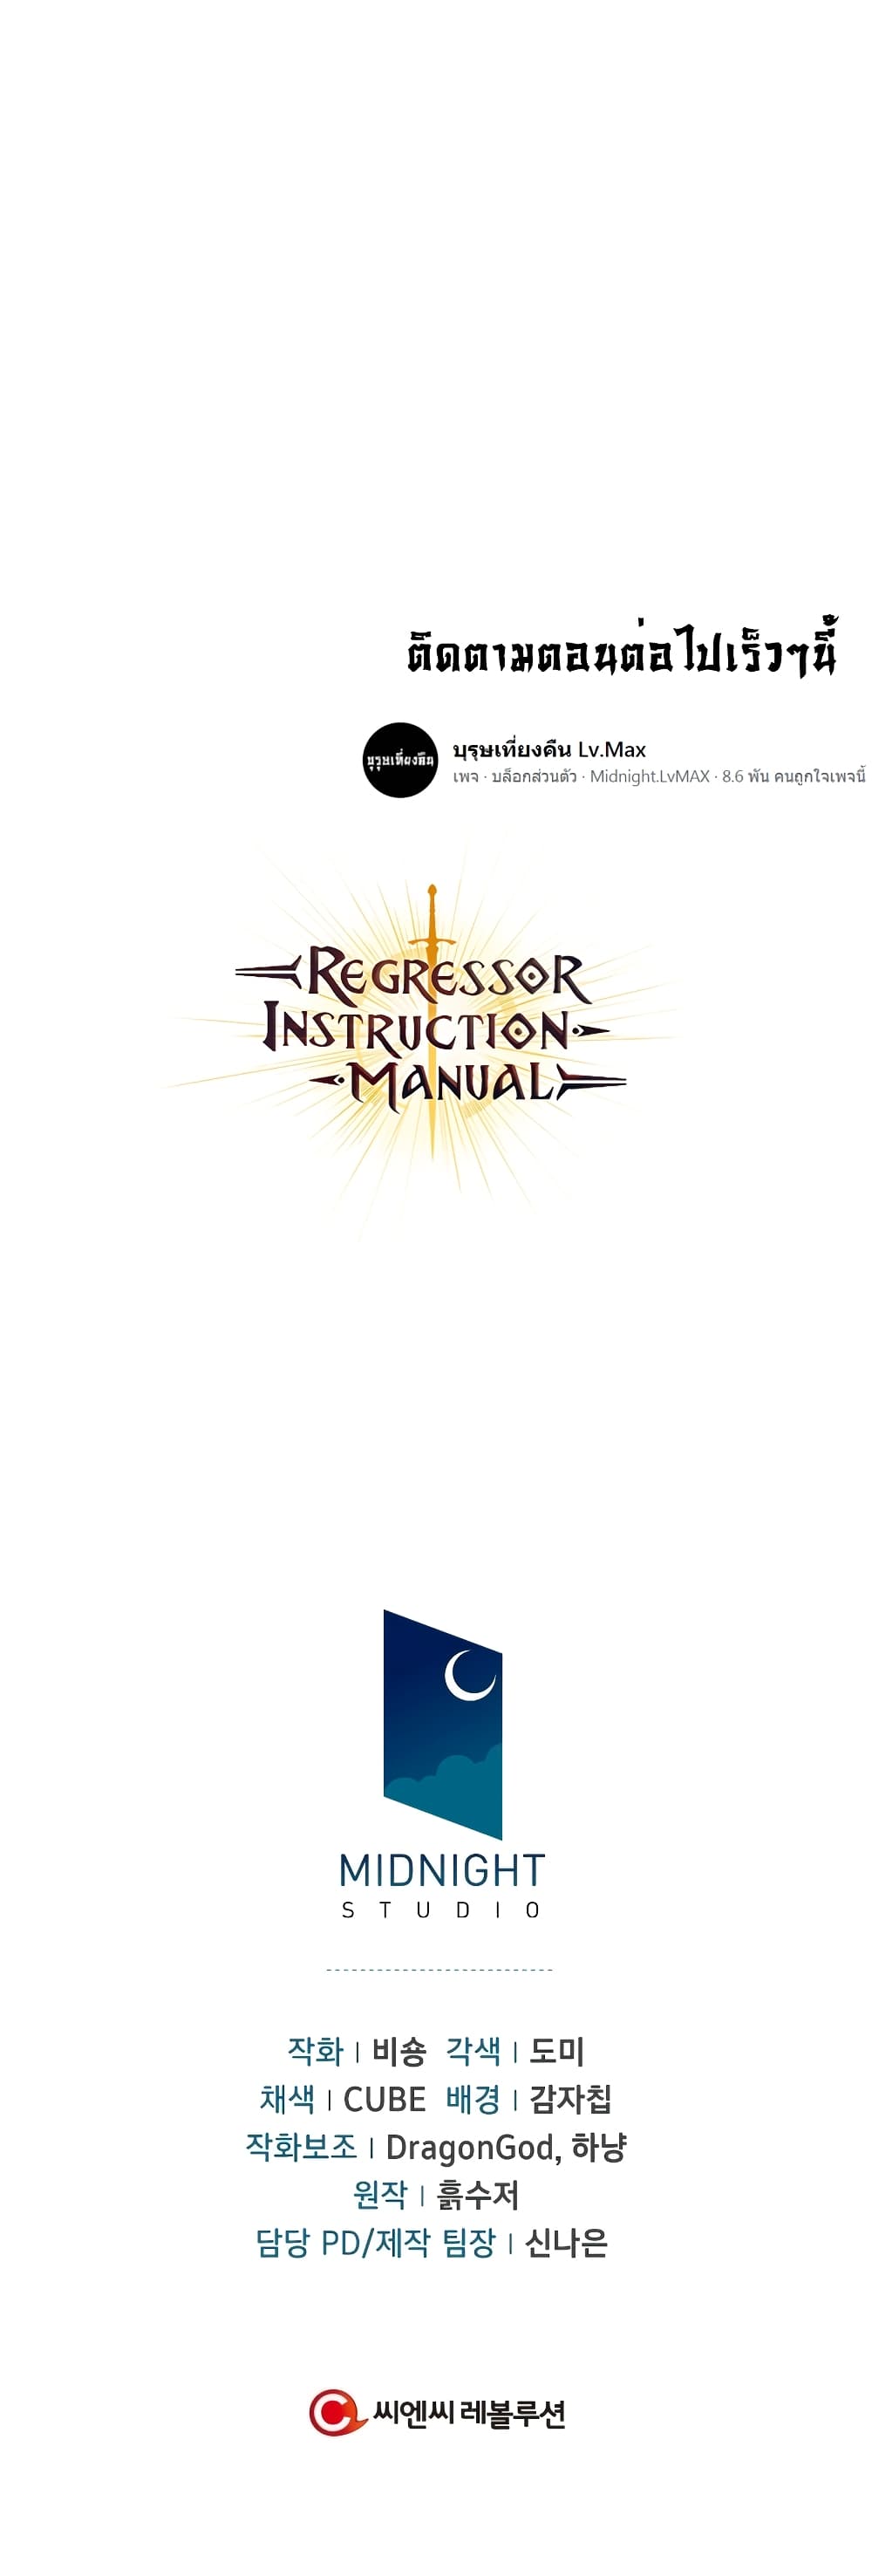 Regressor Instruction Manual 1 (15)